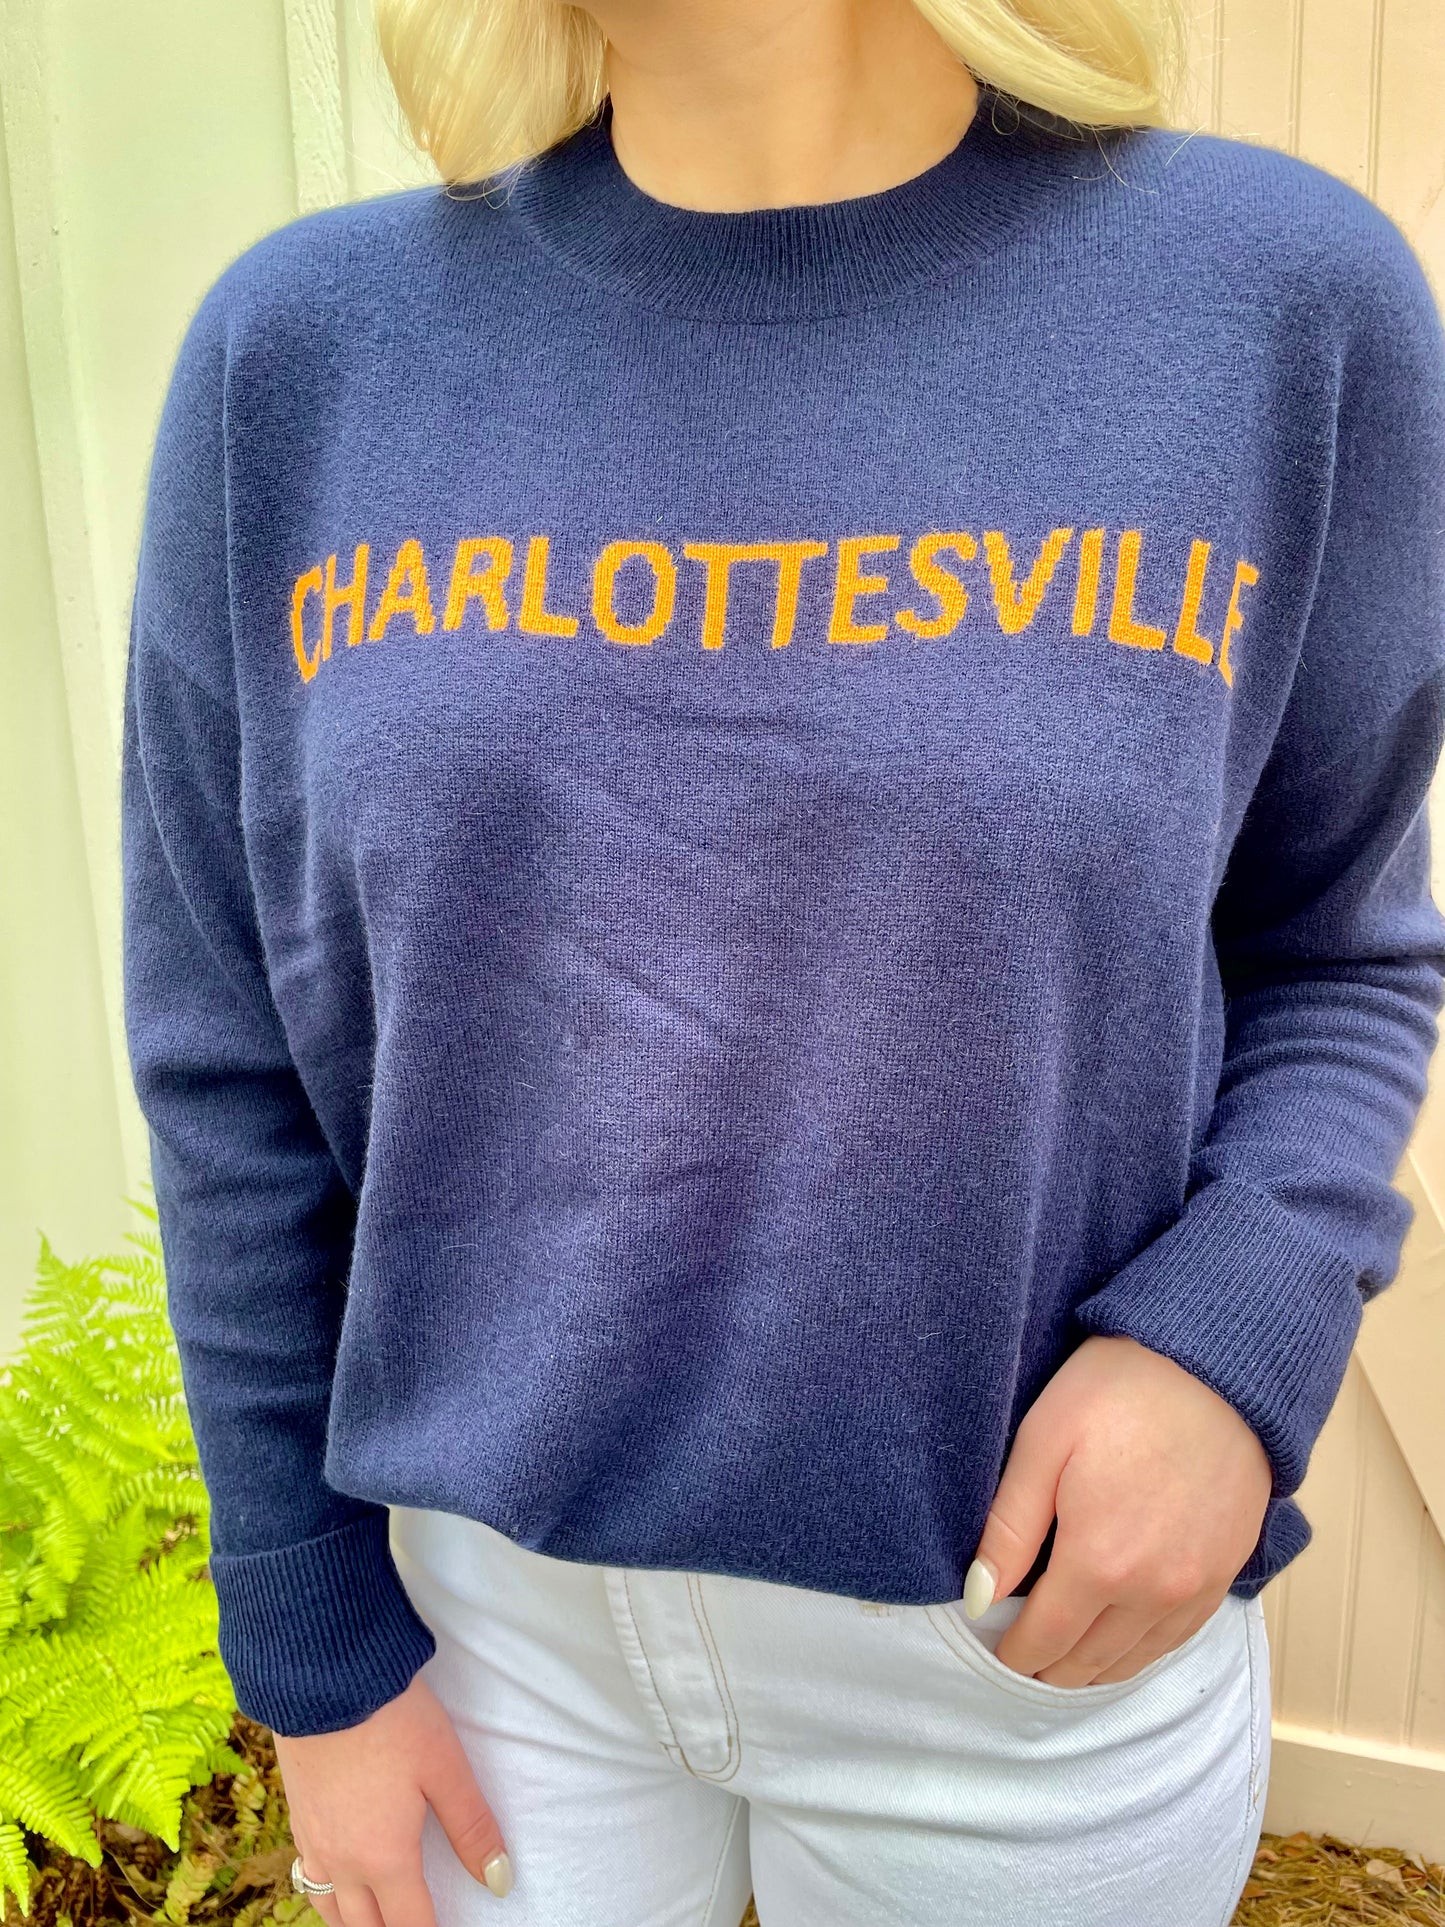 Charlottesville, Virginia Cashmere Sweater